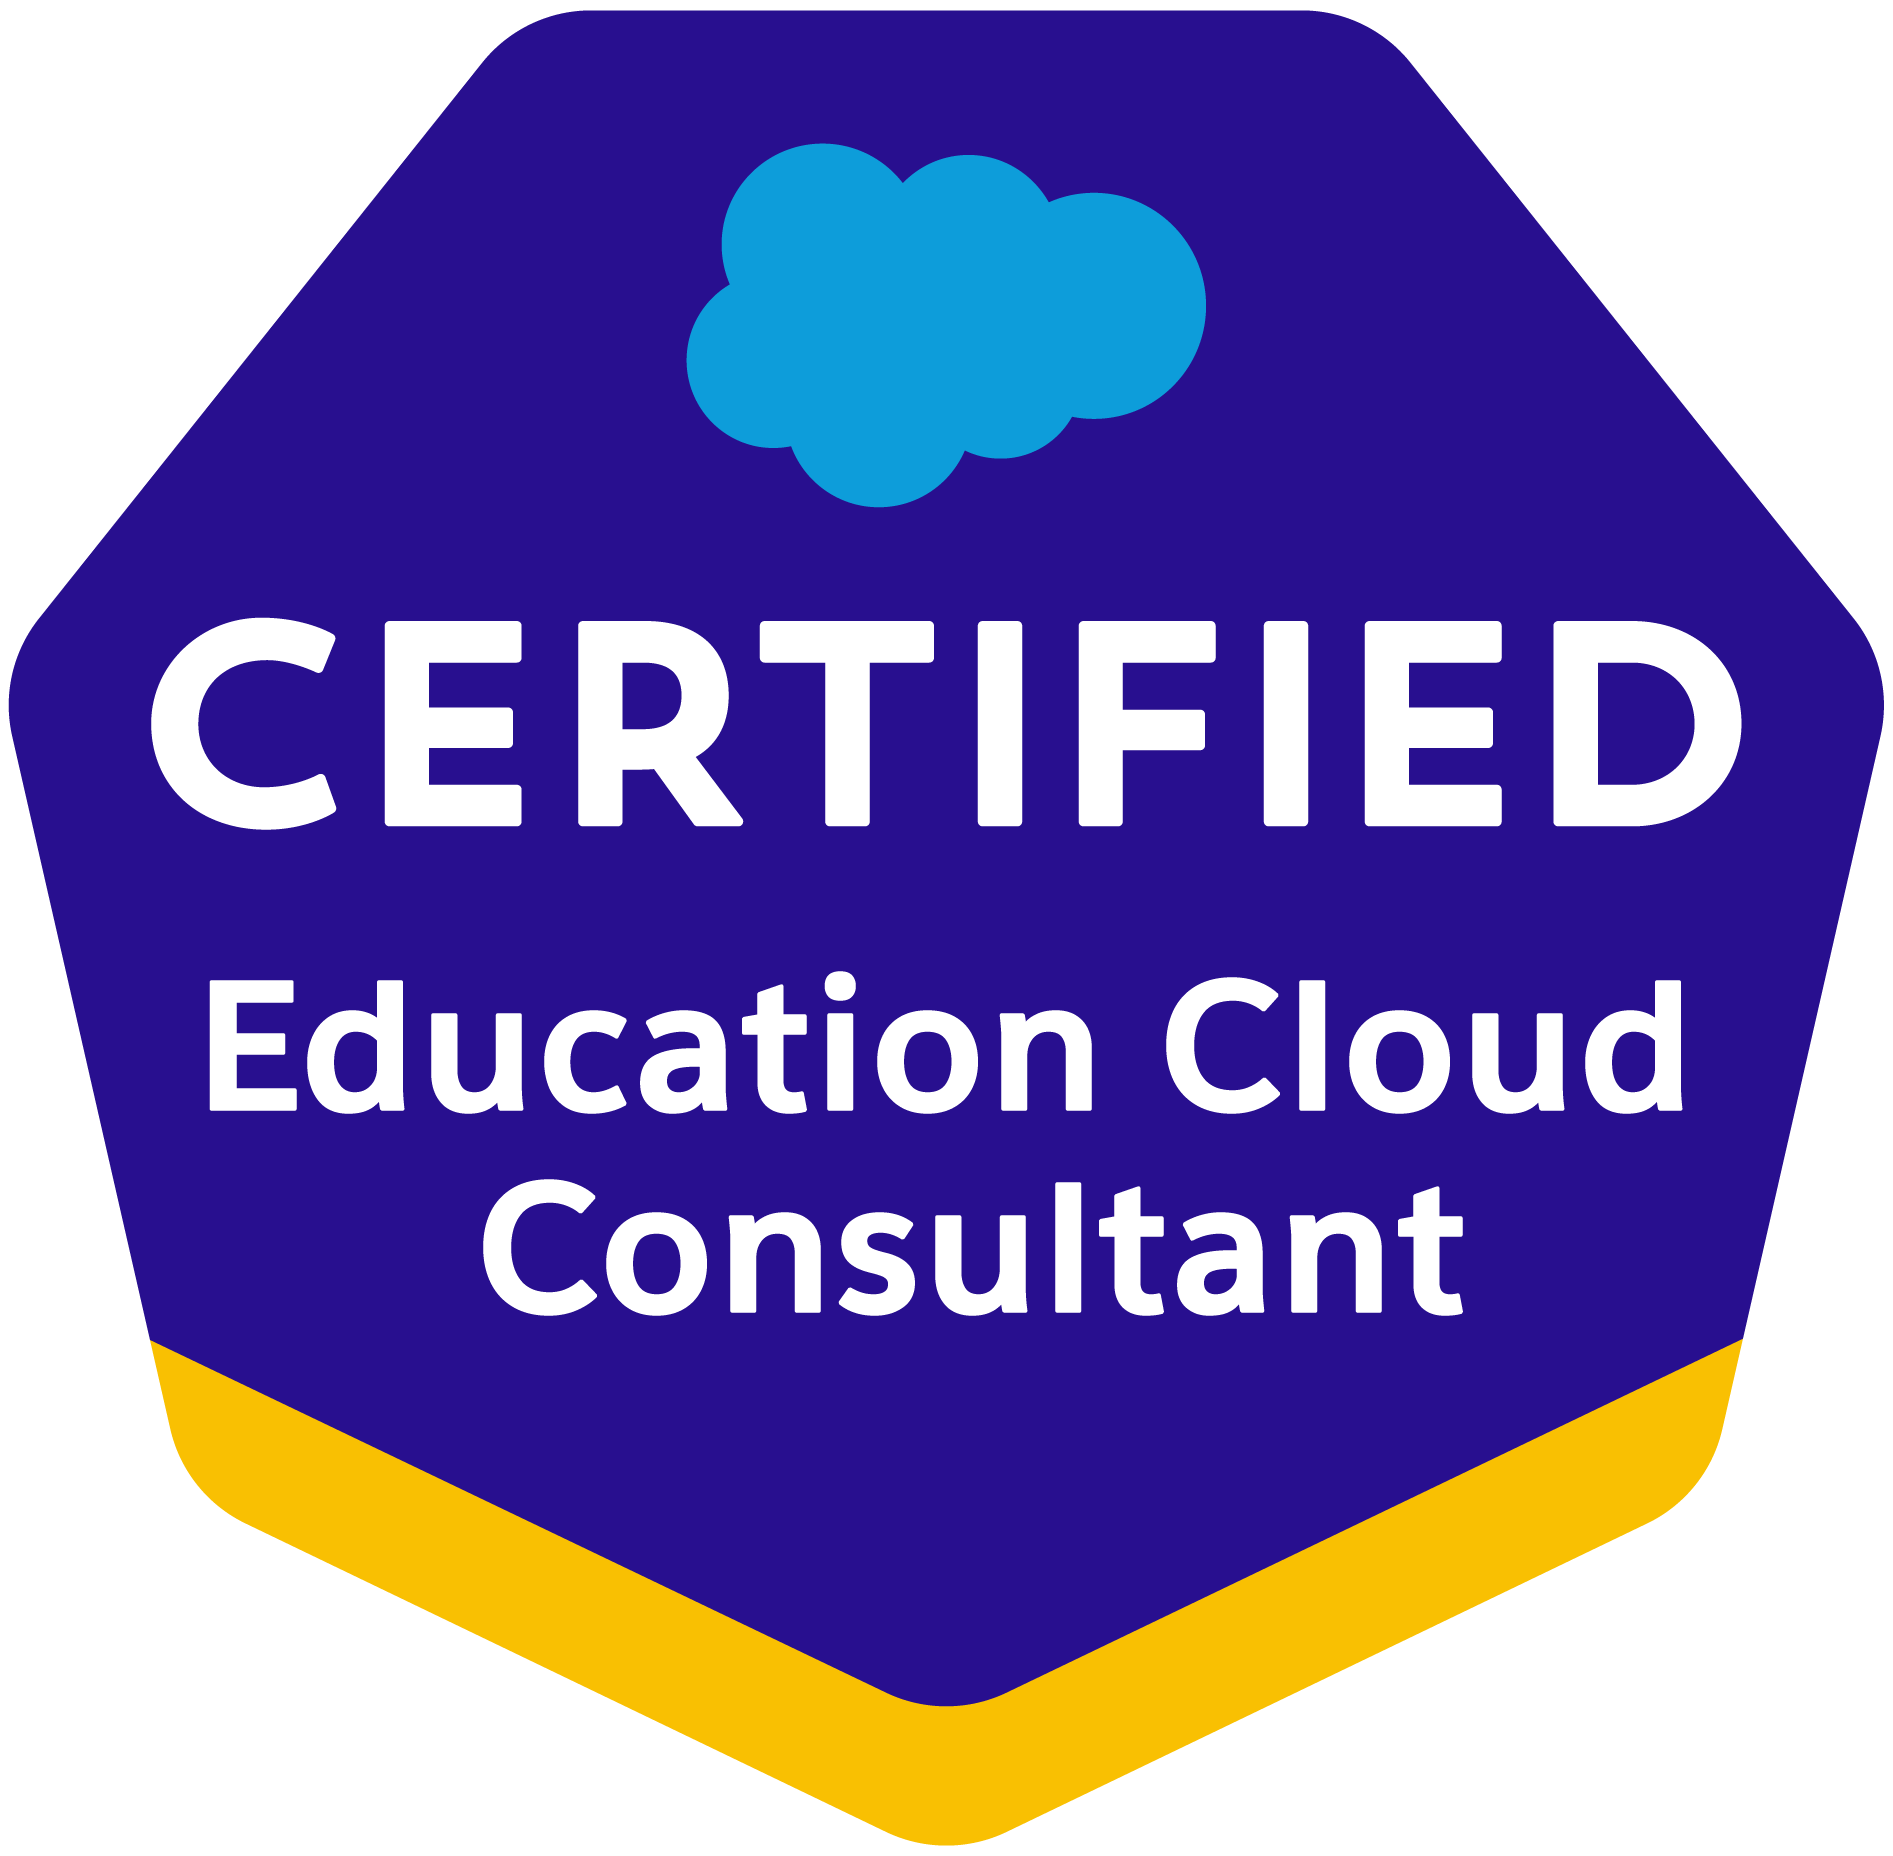 Education Cloud Consultant certification